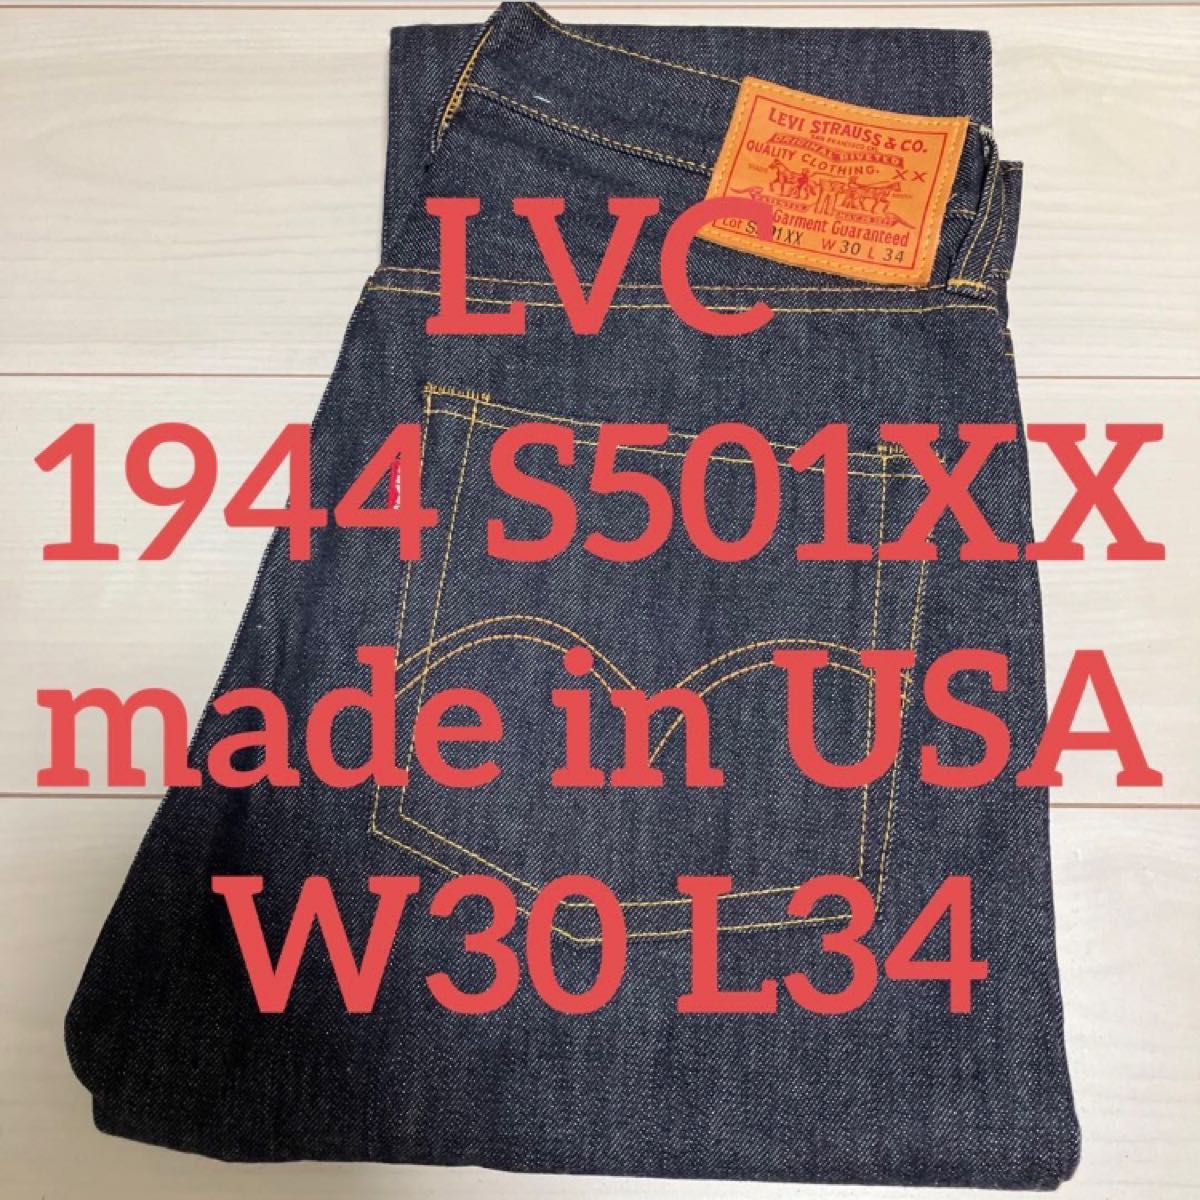 LVC 1944 S501XX made in USA W30 L34 メンズファッション ボトムス